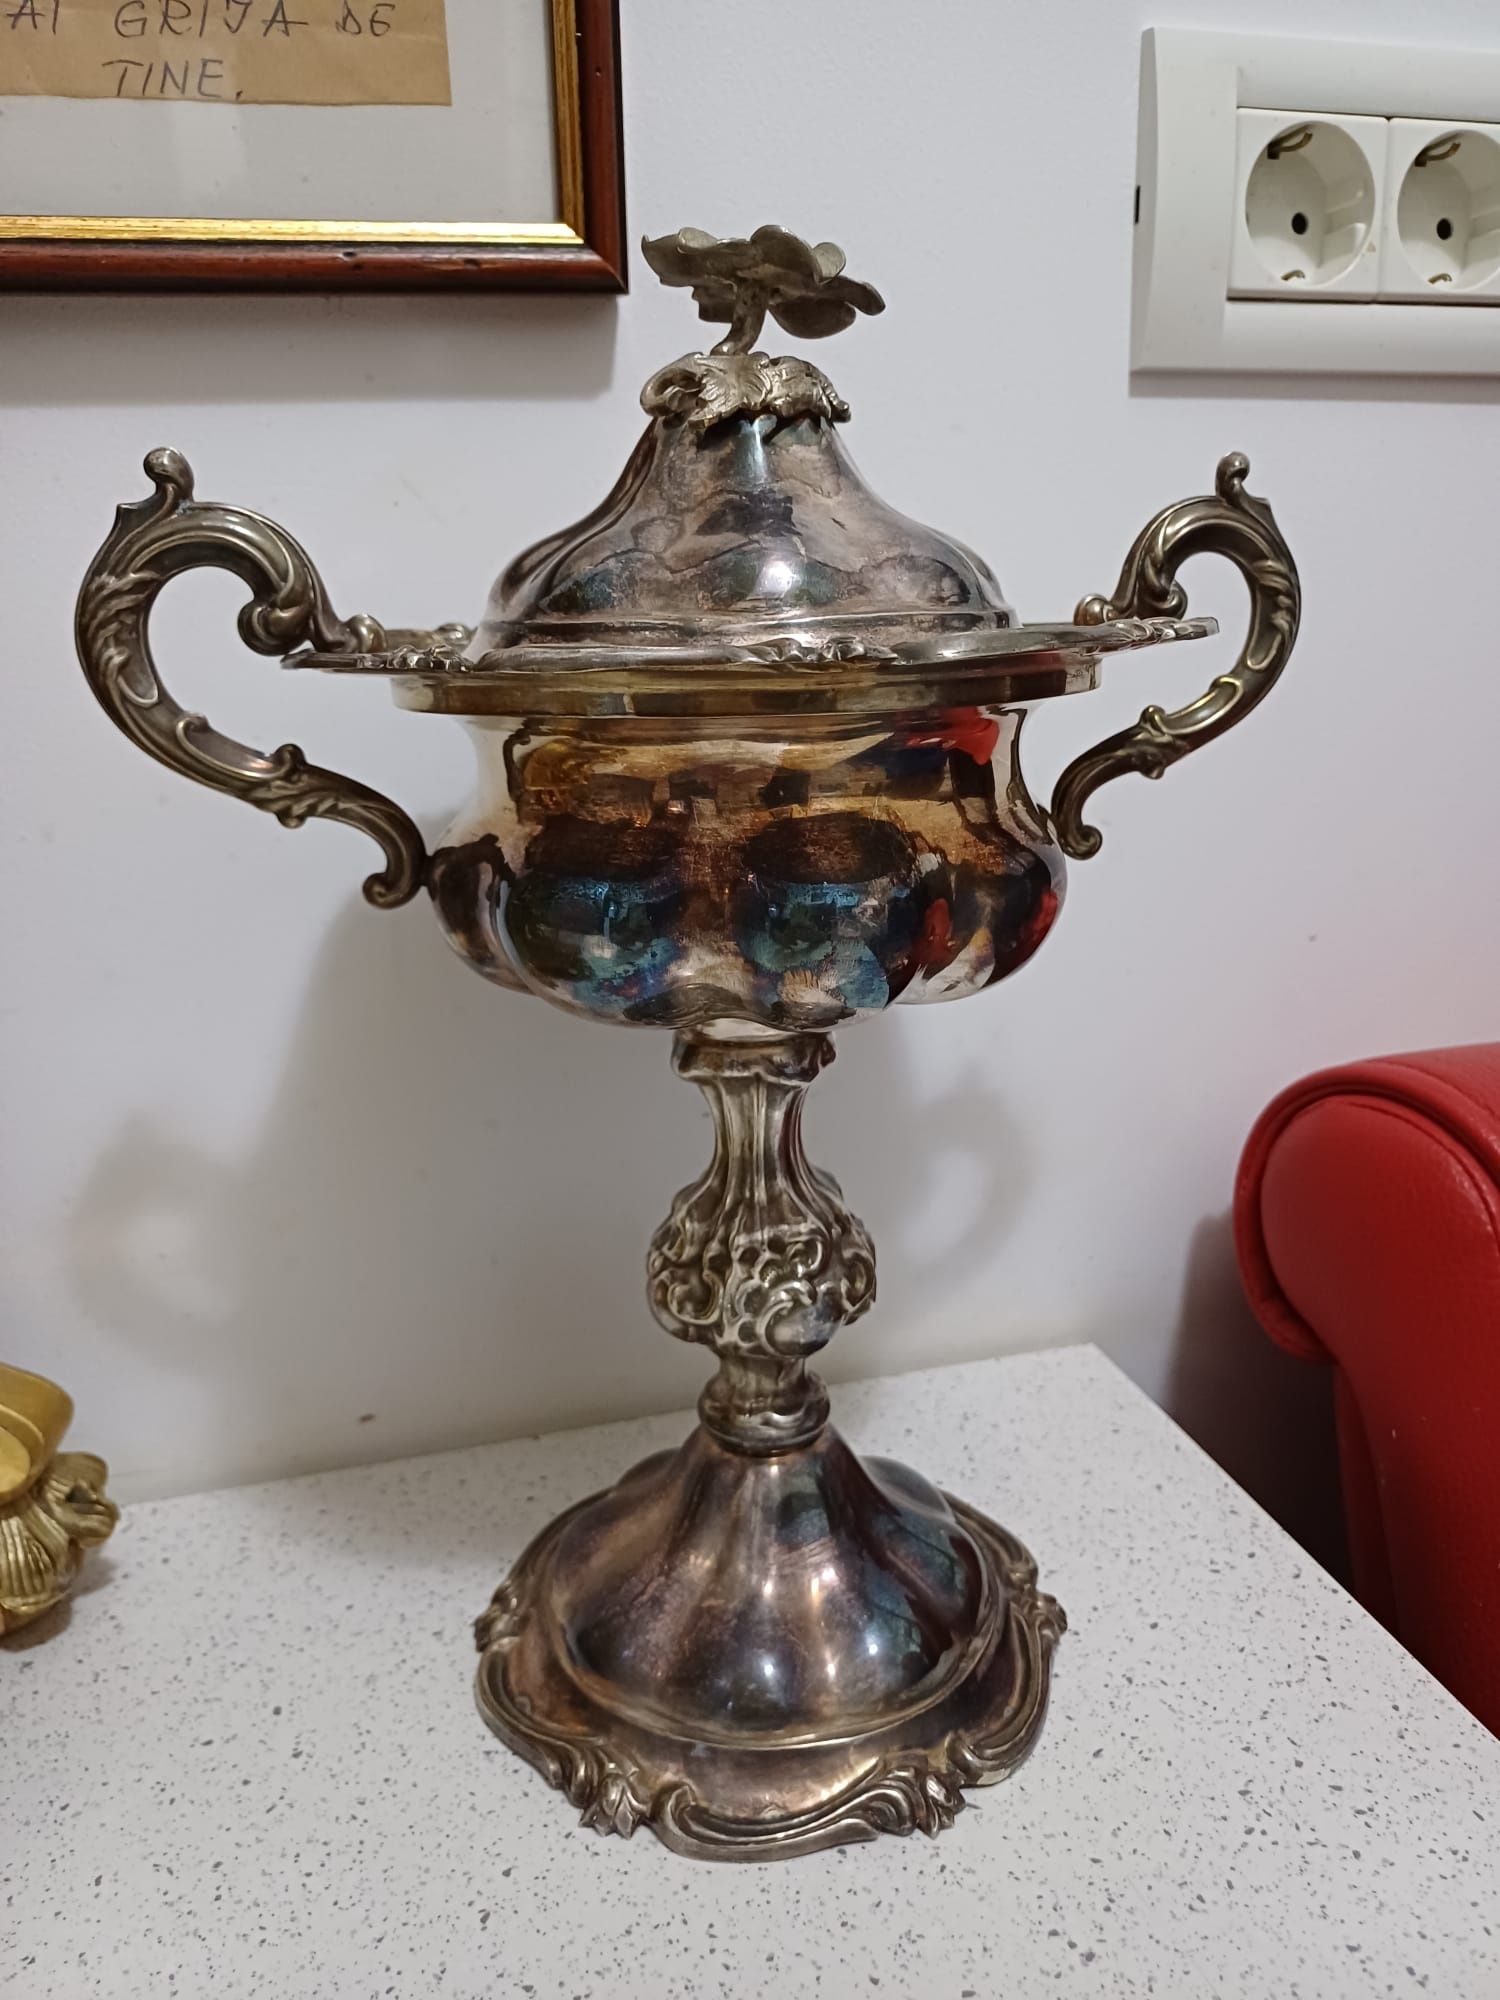 Cupa veche de colecție